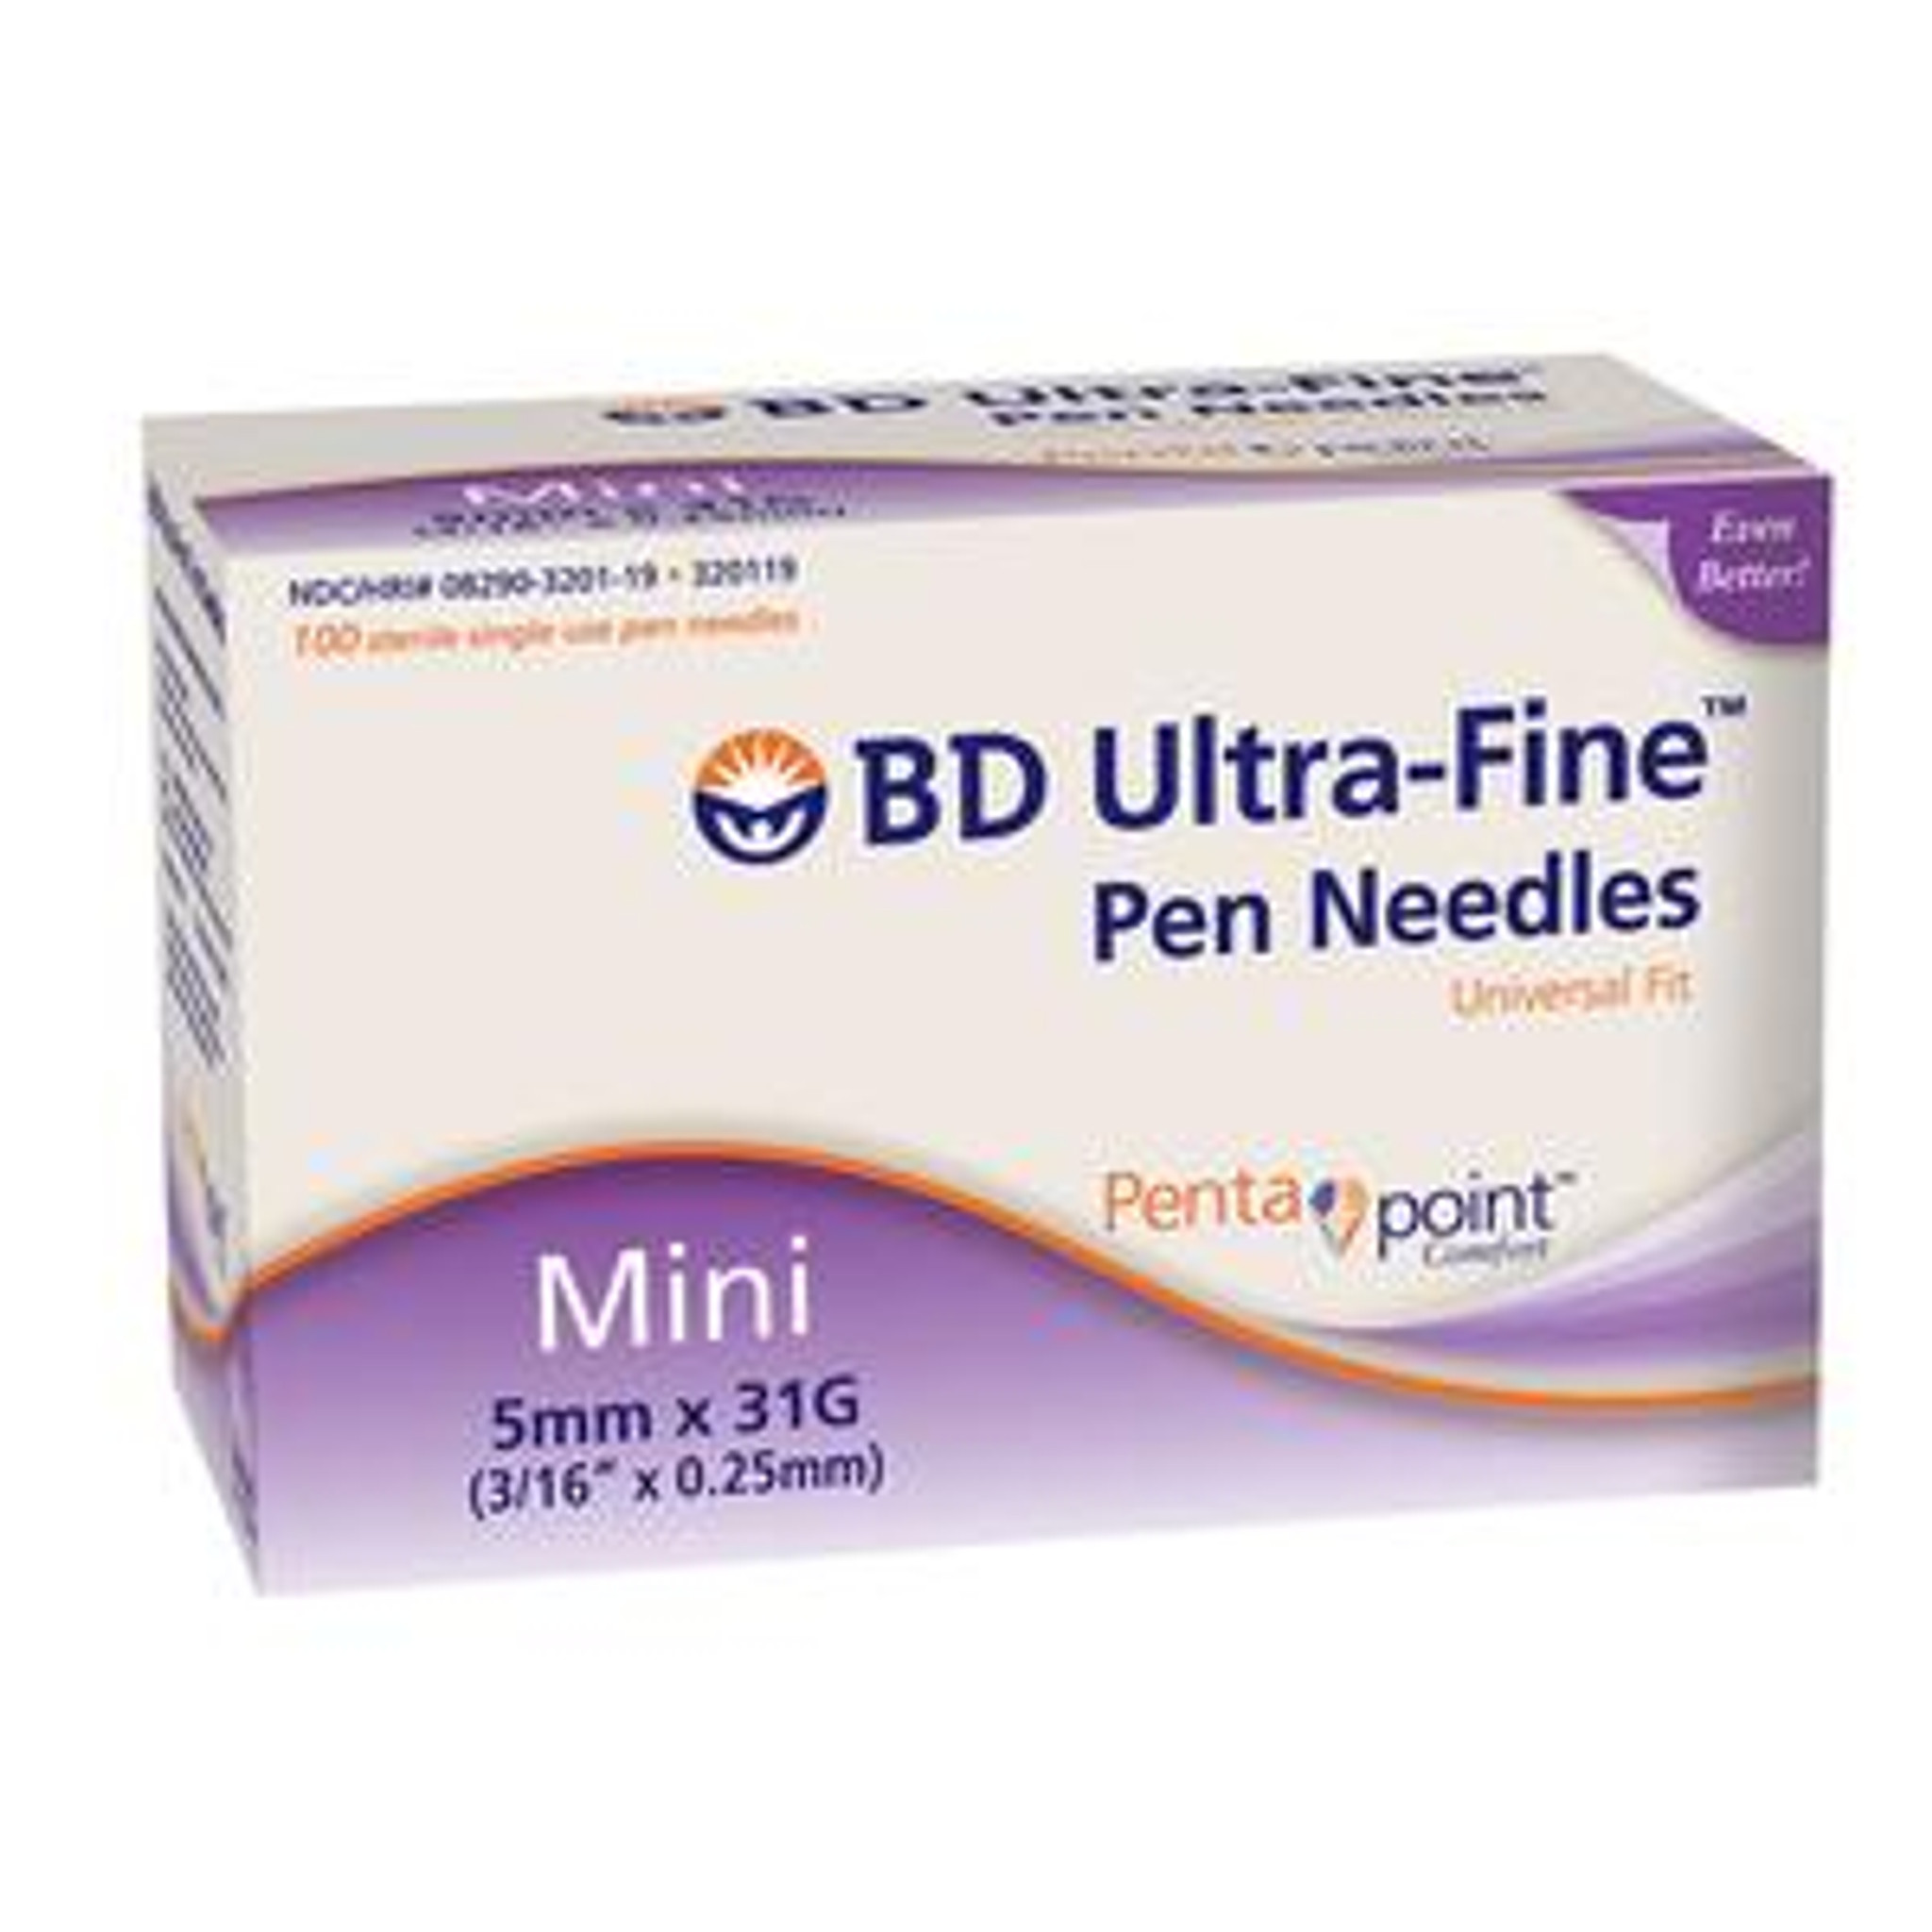 BD Ultra Fine Pen Need-les 5mm x 31G 